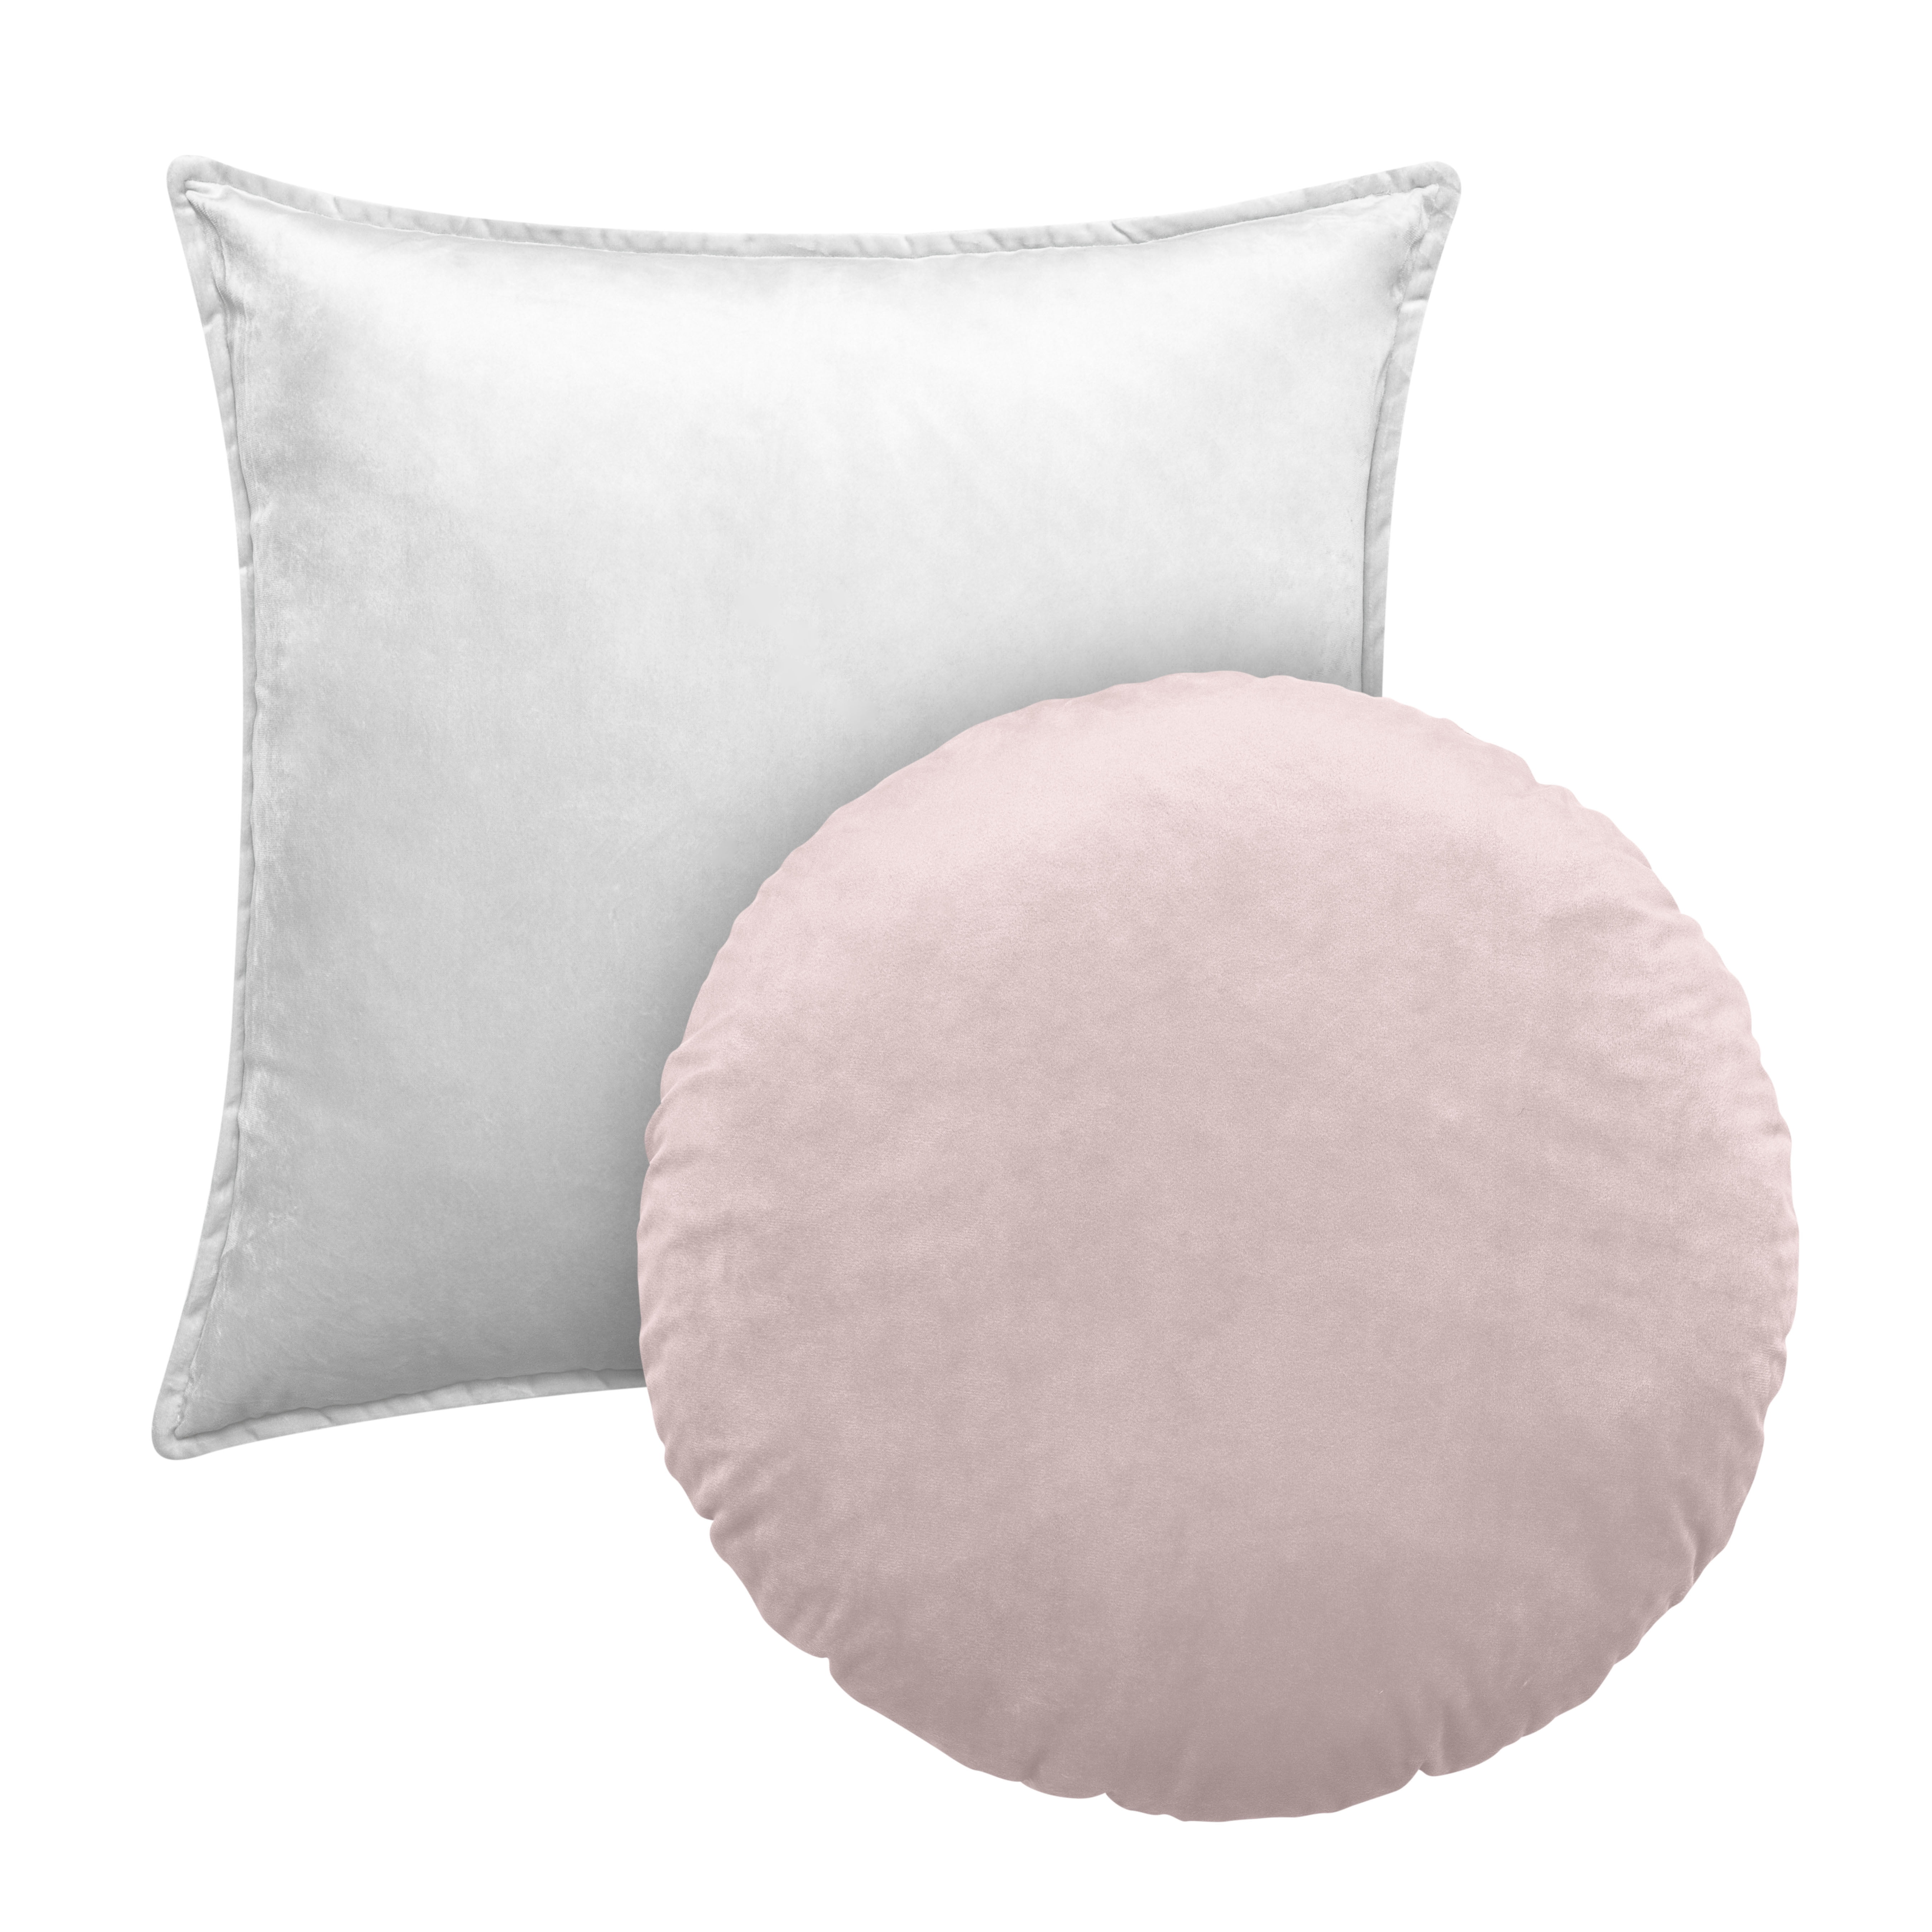 2 Pieces of Cozy Velvet Square Decorative Double face Throw Pillow